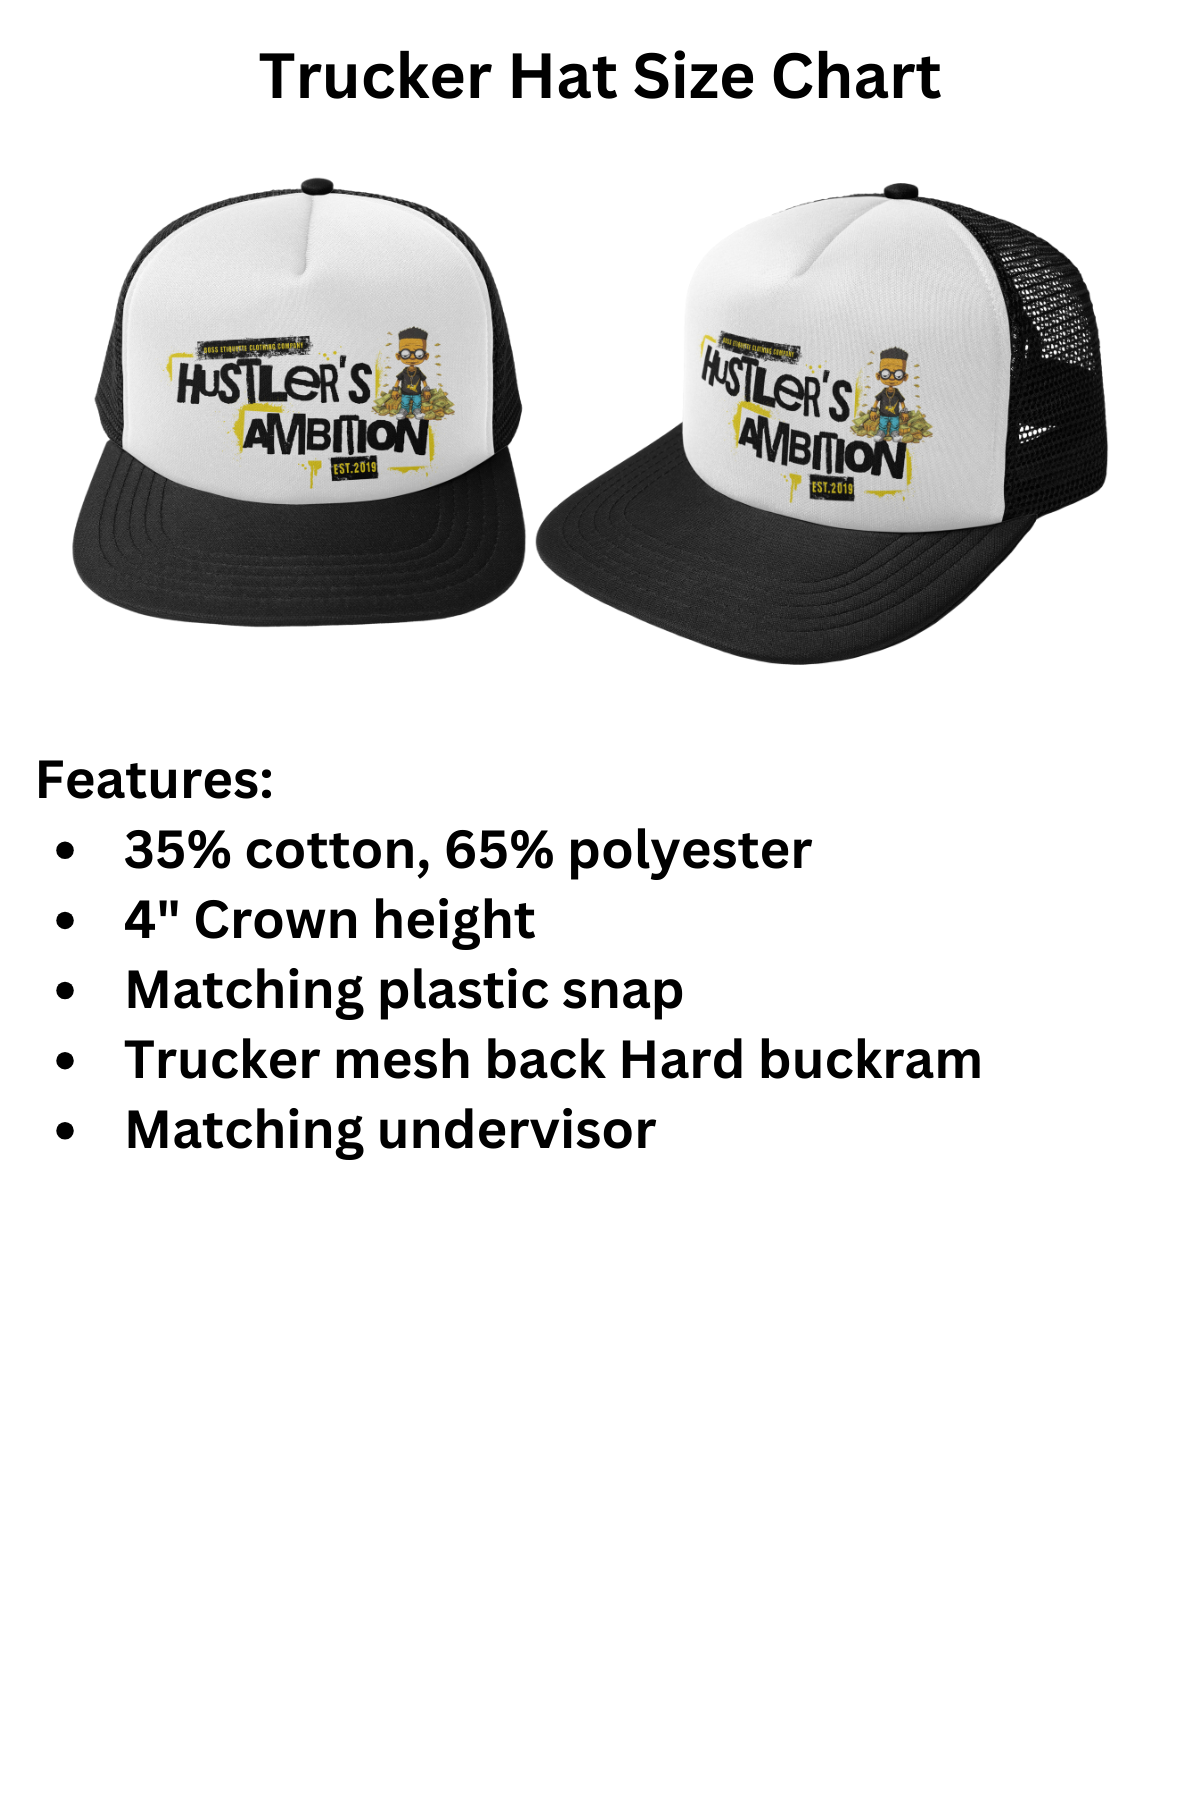 Boss Etiquette Clothing Company "Hustler Ambition" Shirt & Hat Combo